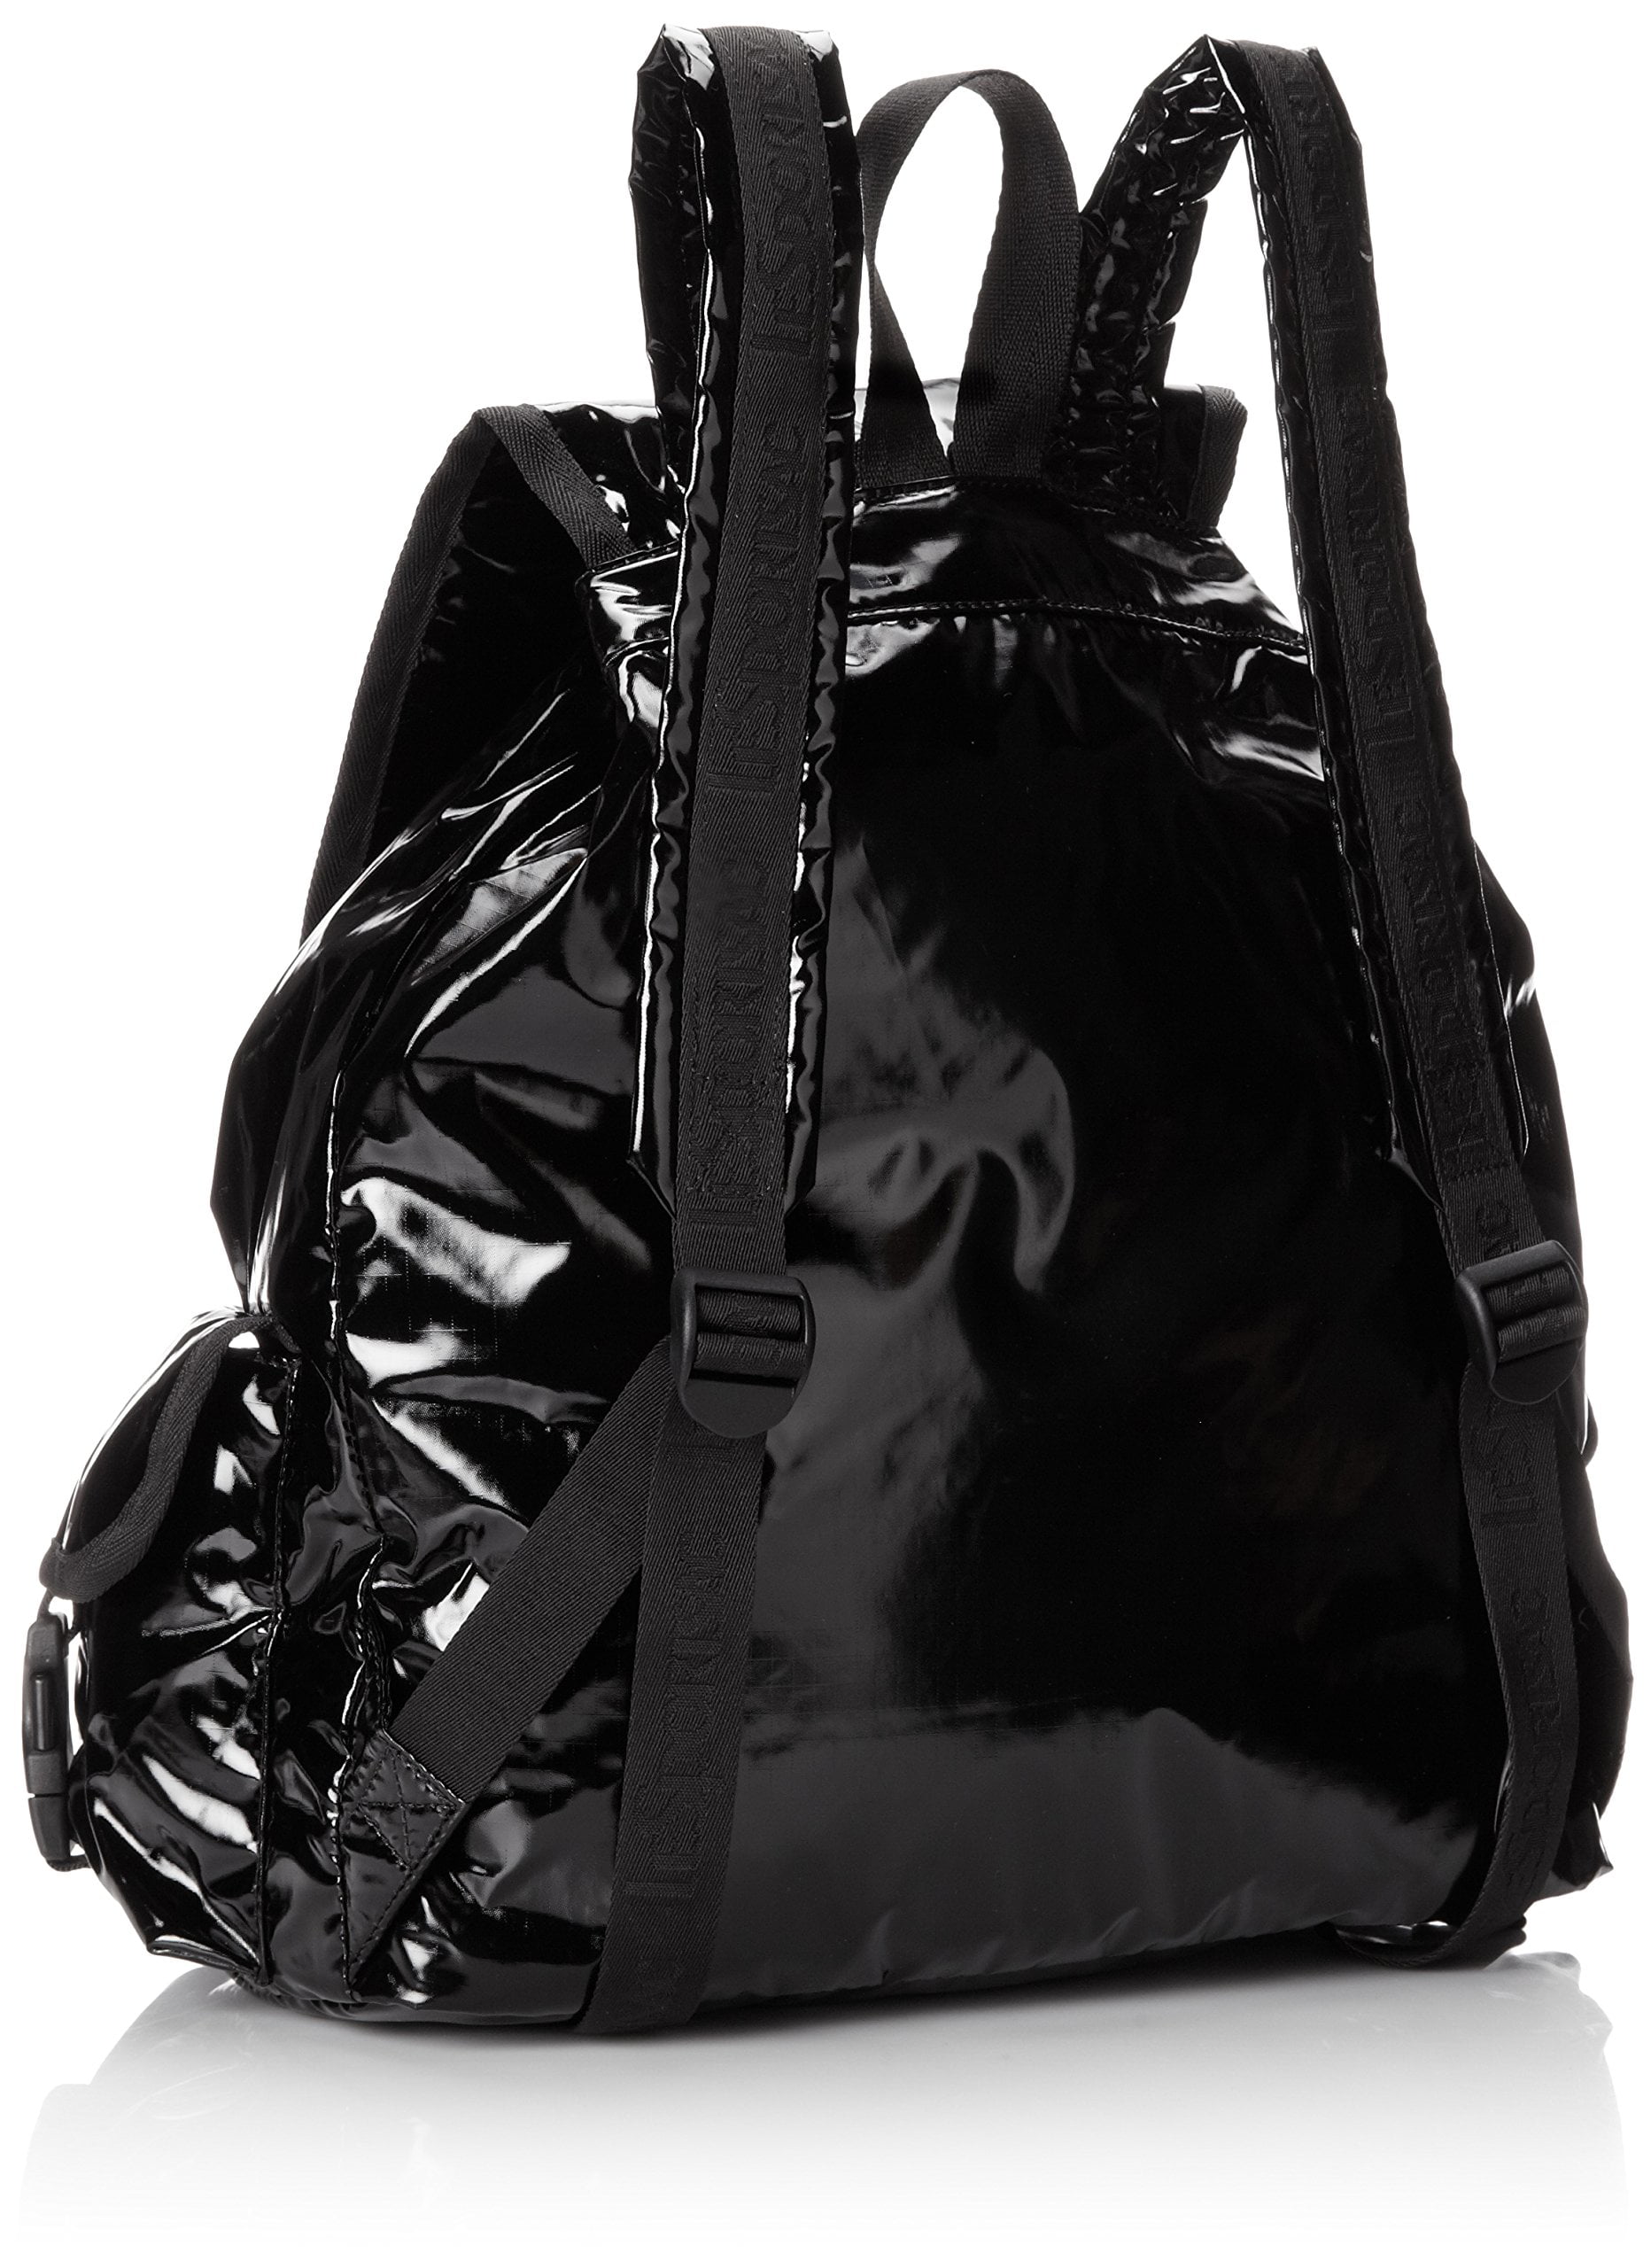 Voyager Backpack (Black Patent) 